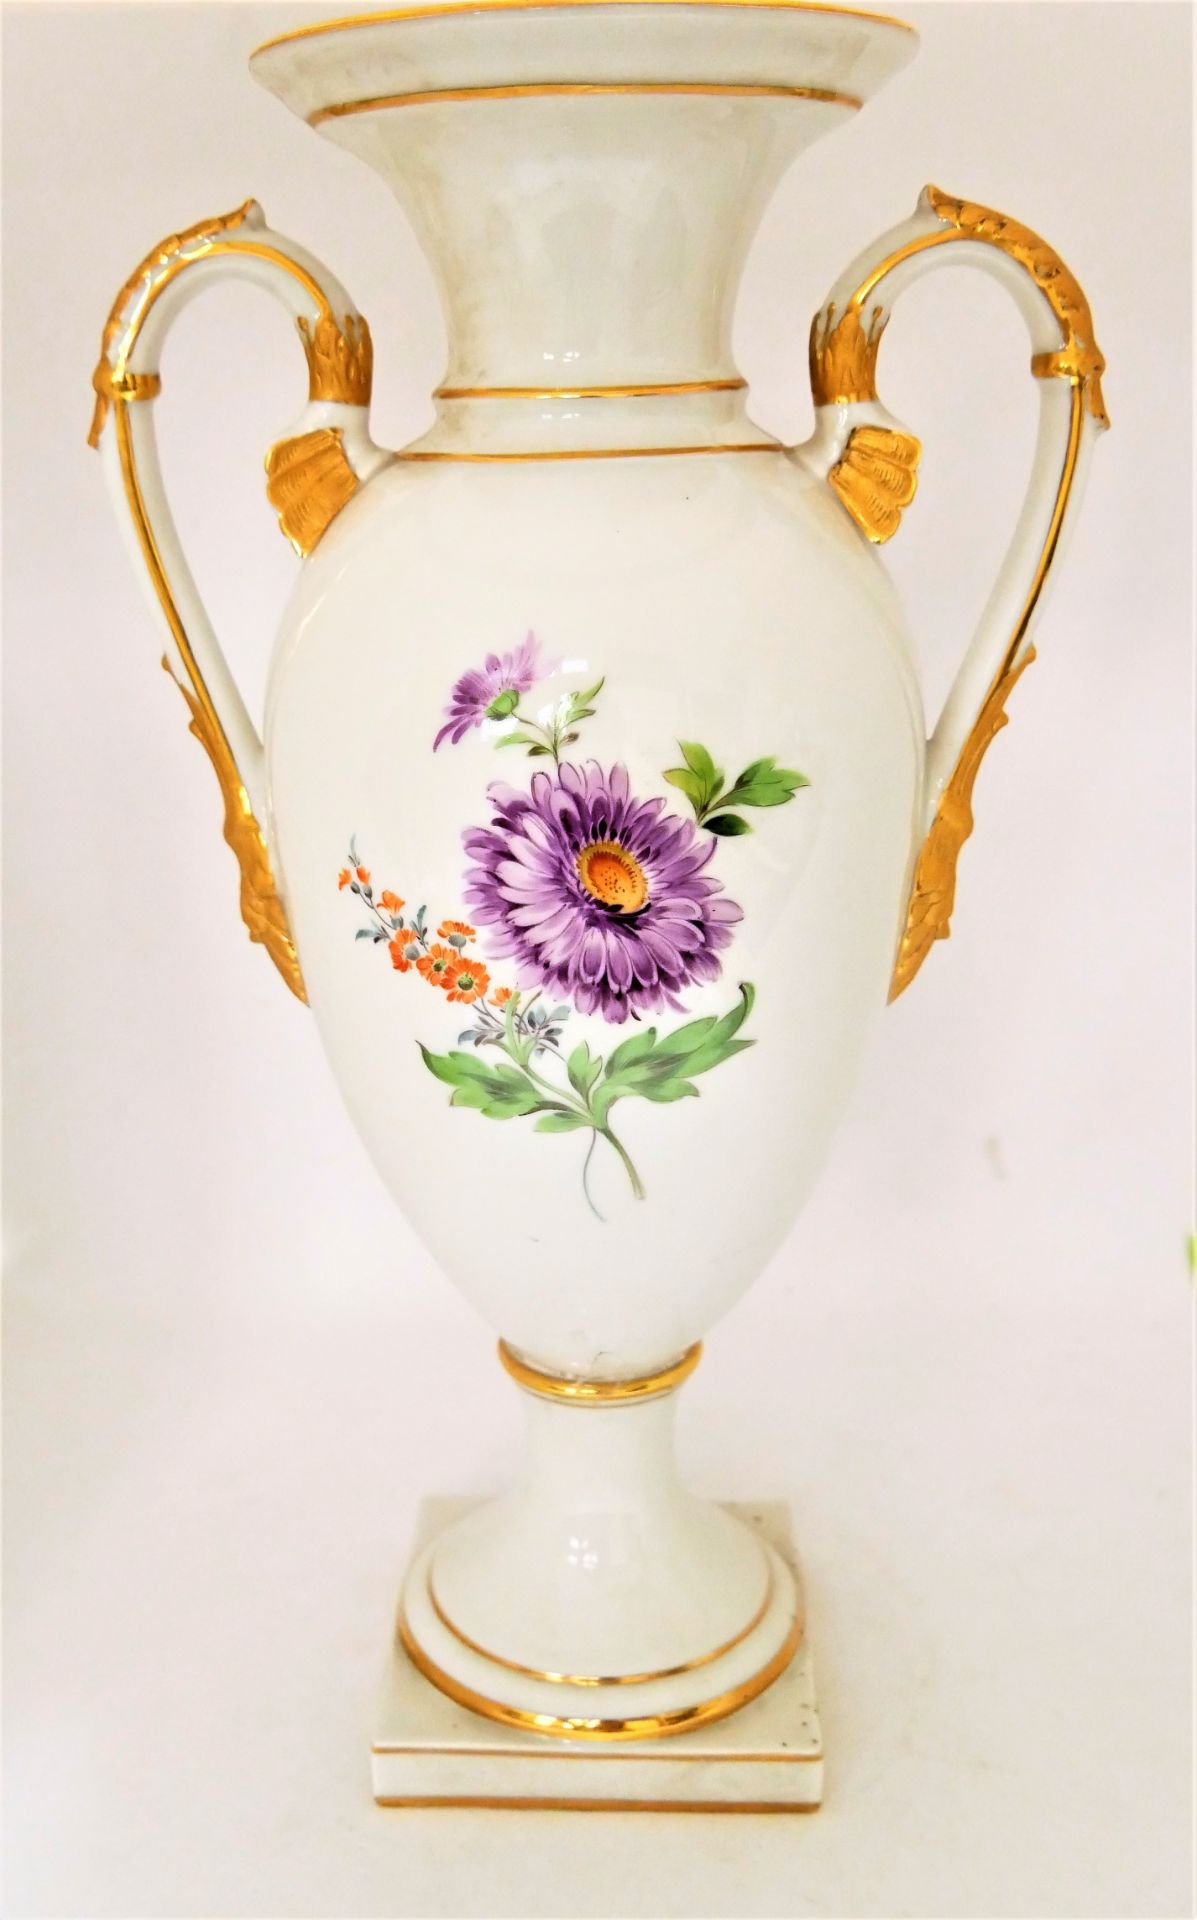 Amphoren-Porzellanvase von Potschappel Dresden, PGH, handbemalt, guter Zustand, Höhe ca. 34 cm